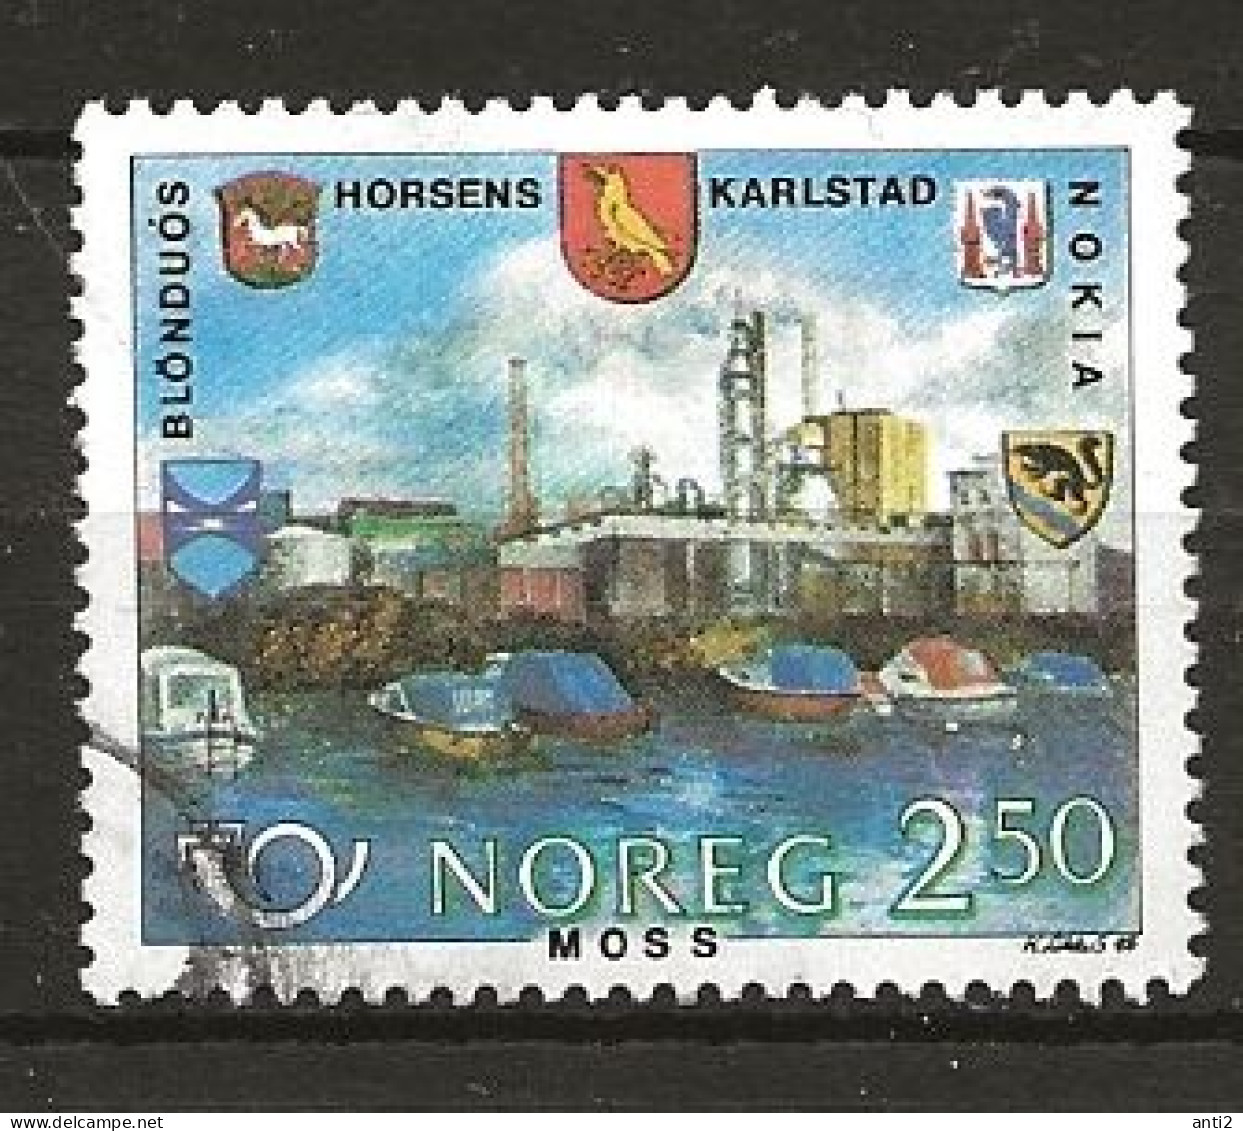 Norway 1986 NORTH: Twin Cities In Scandinavia, Moss, Blonduos, Horsens, Karlstad, Nokia, Mi 948, Cancelled(o) - Usados